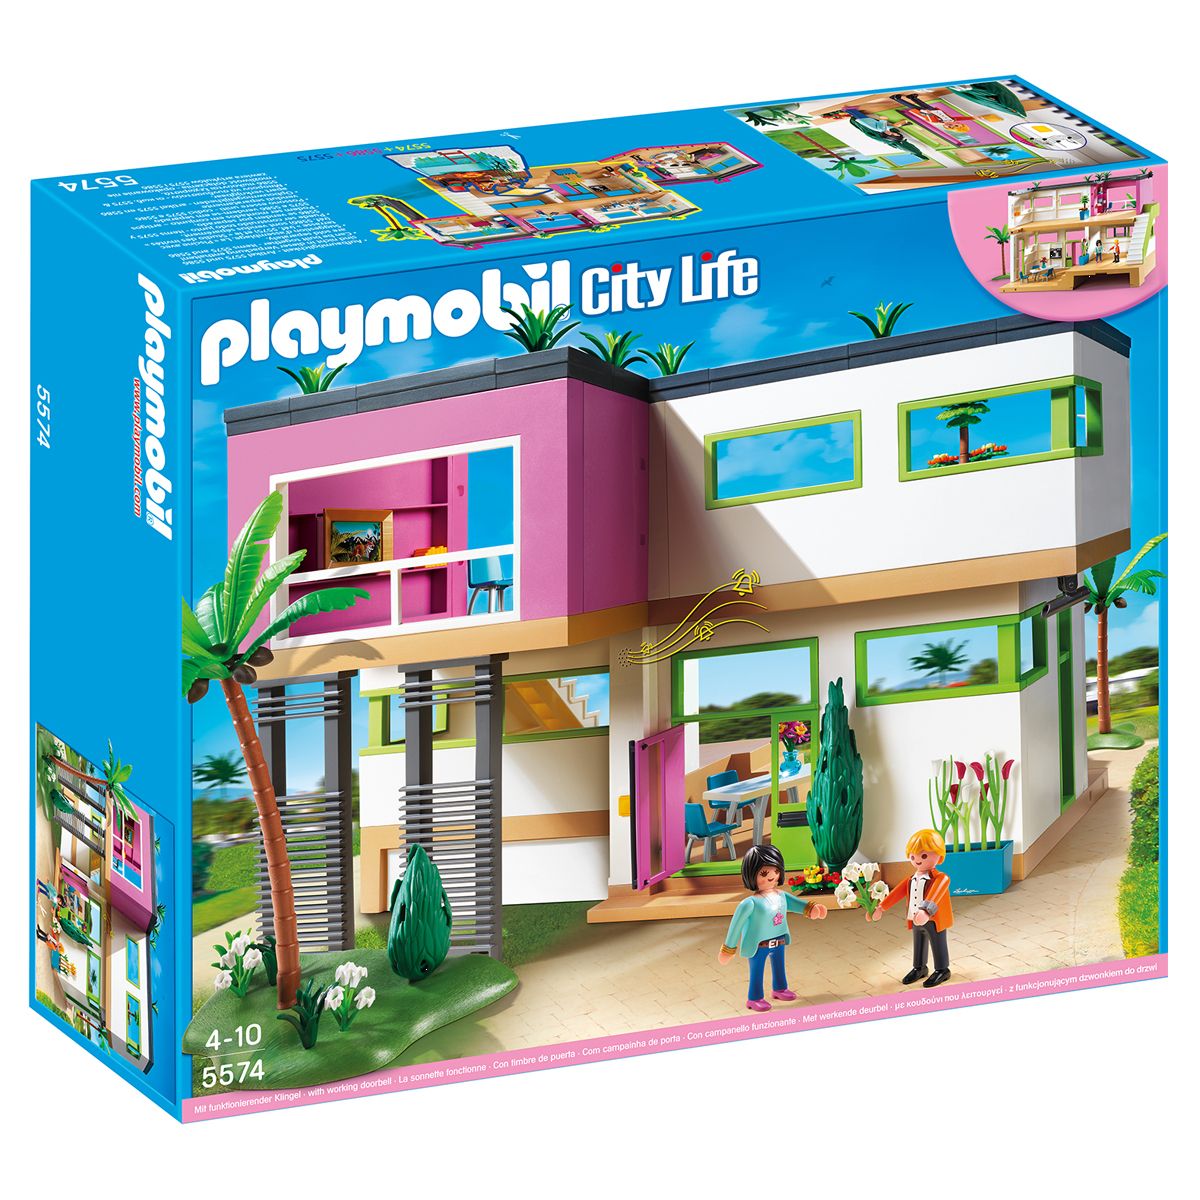 maison playmobil city life